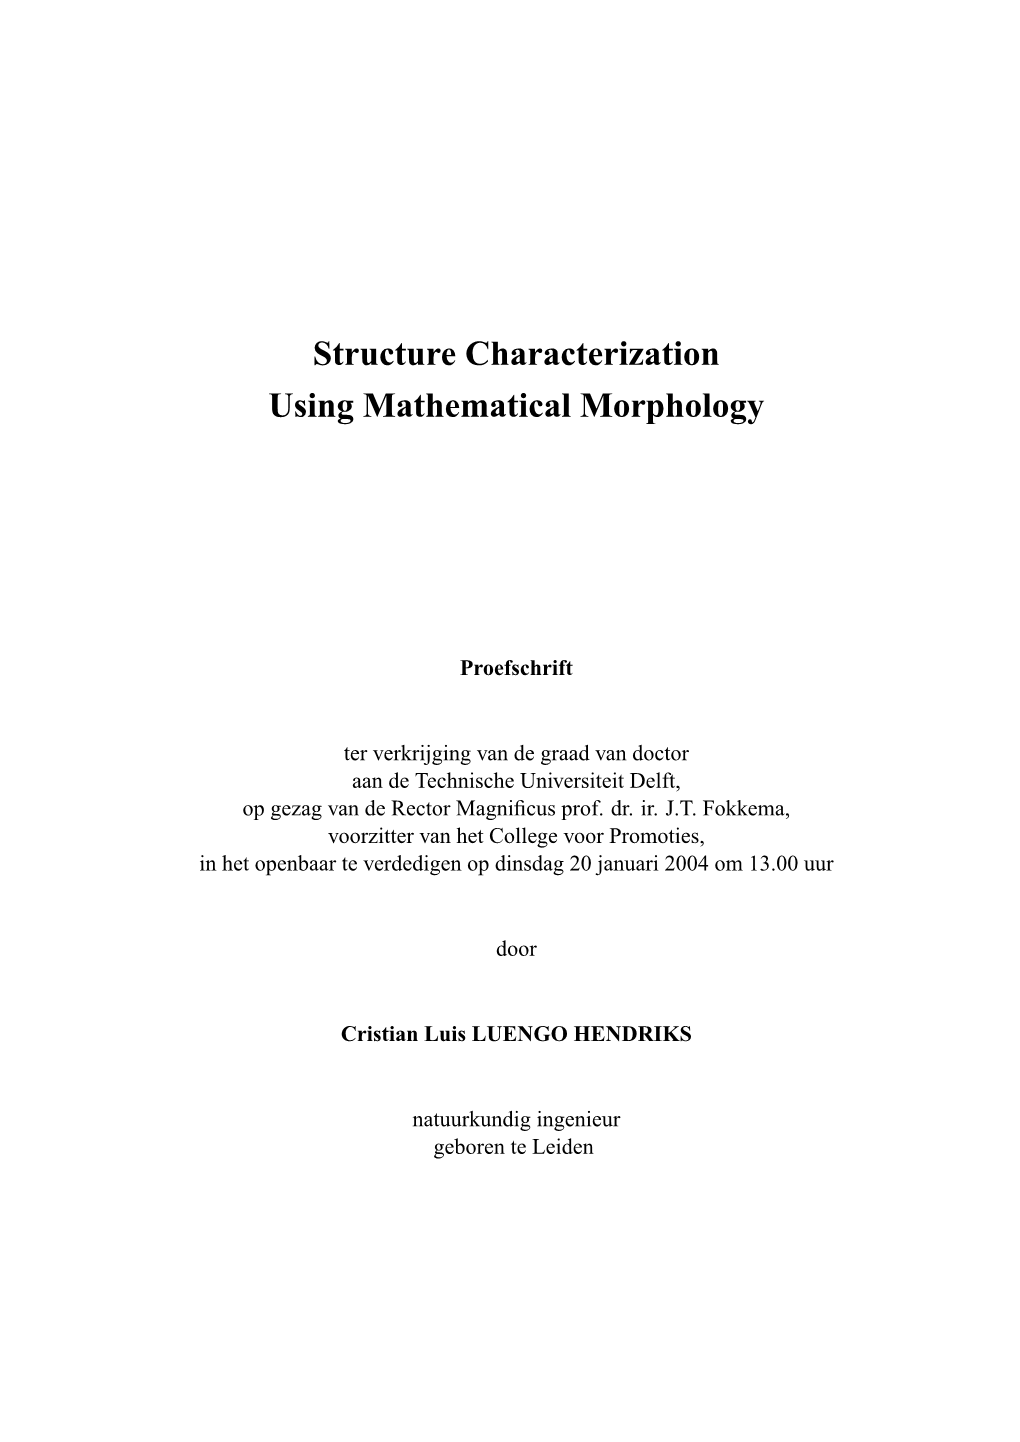 Structure Characterization Using Mathematical Morphology